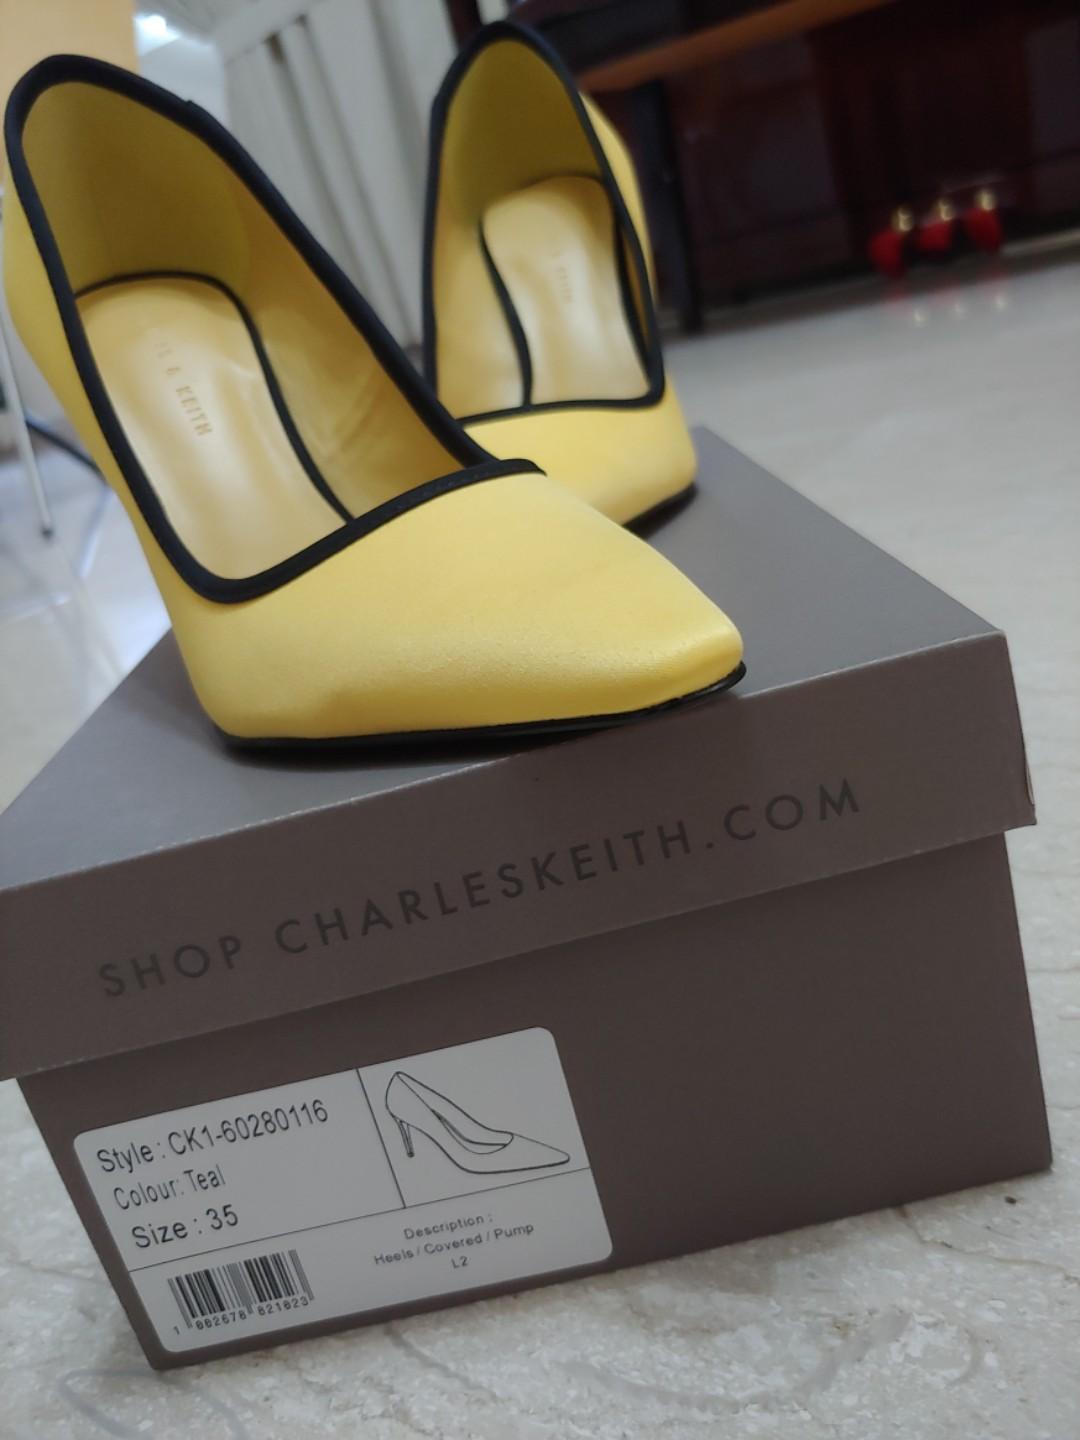 teal colour heels